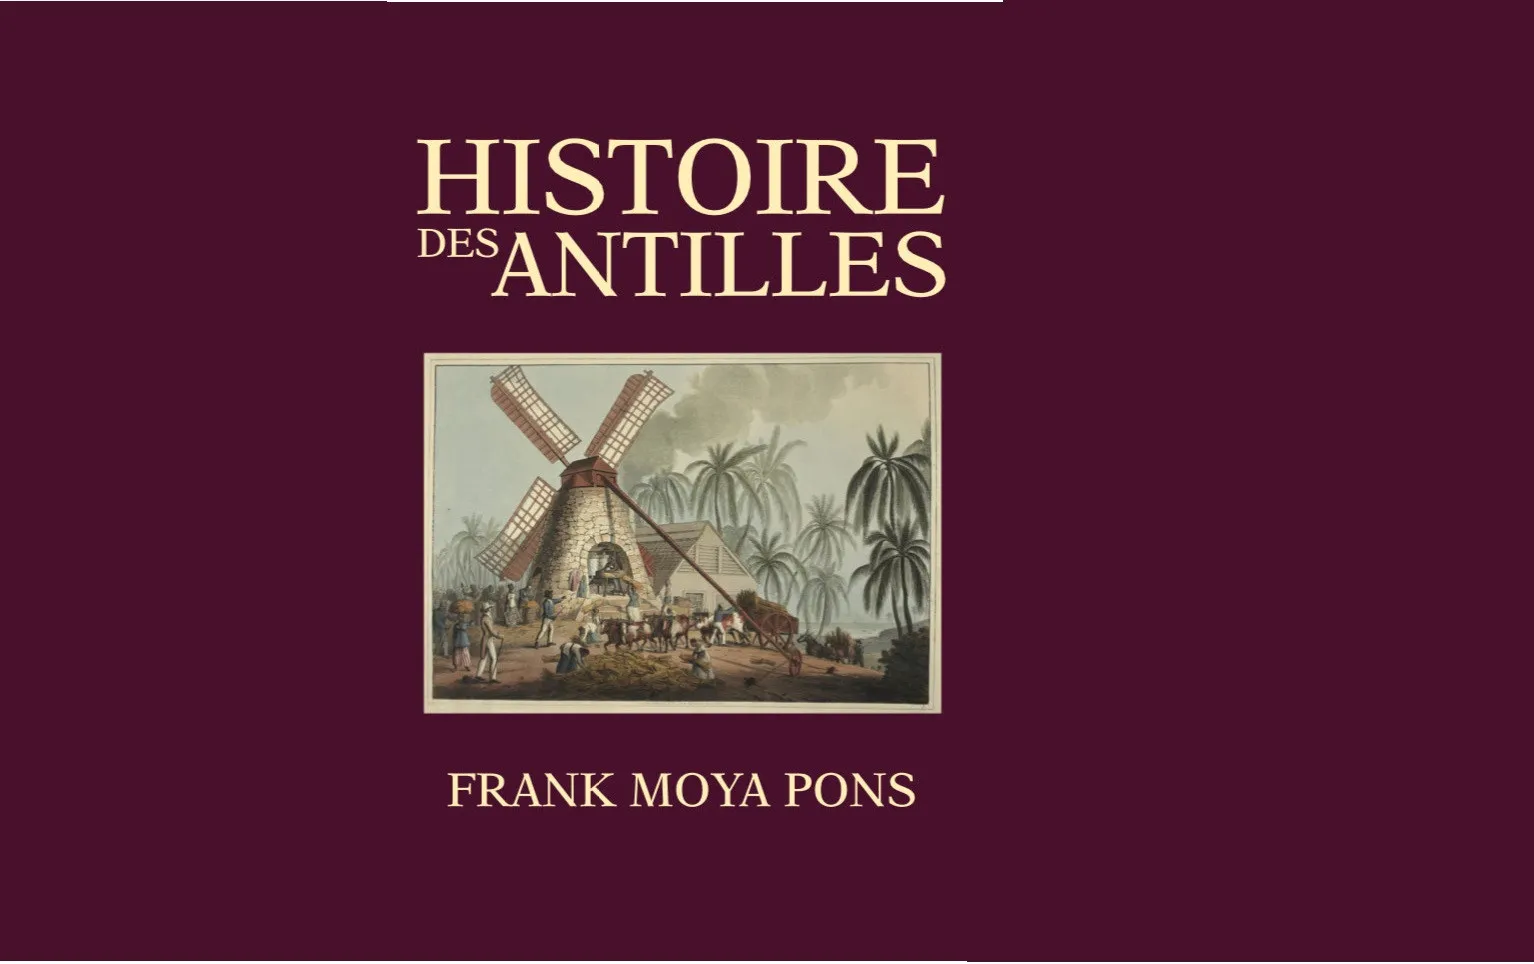 Pondrán a circular libro “Historia del Caribe”, edición en francés